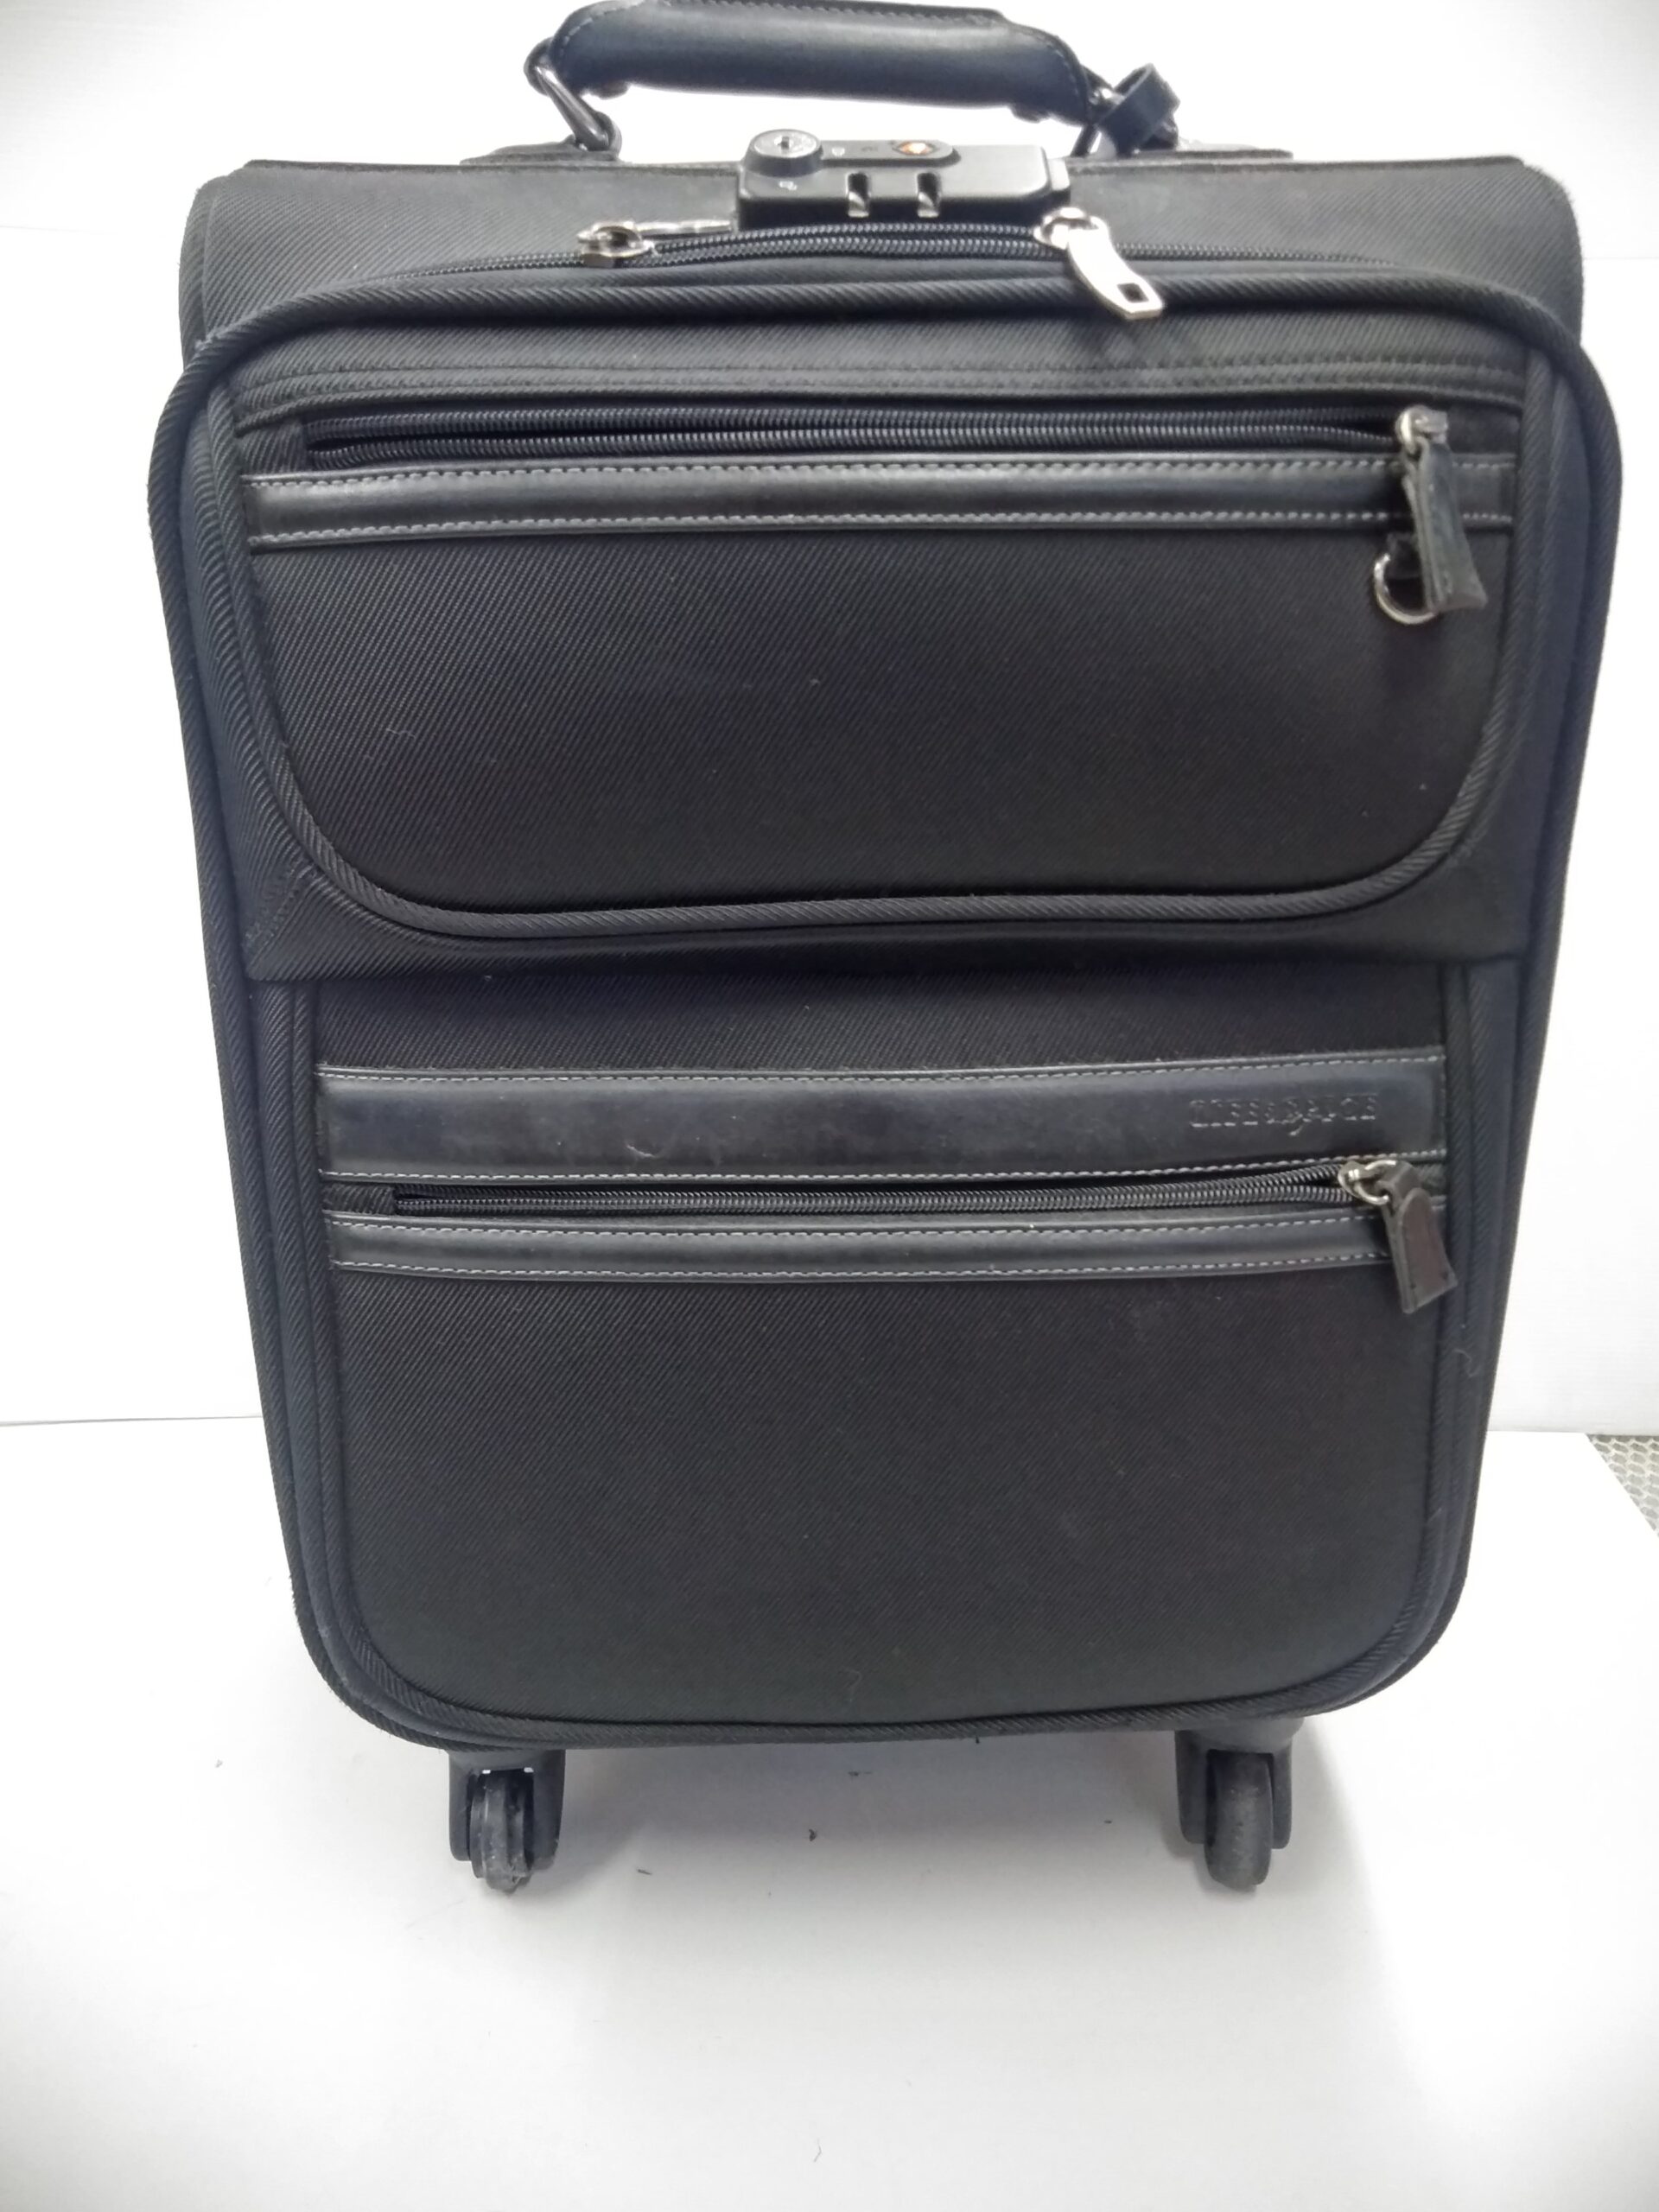 13208-100-10】JAL LIFE&SPICE スーツケース 43ℓ 春バーゲン